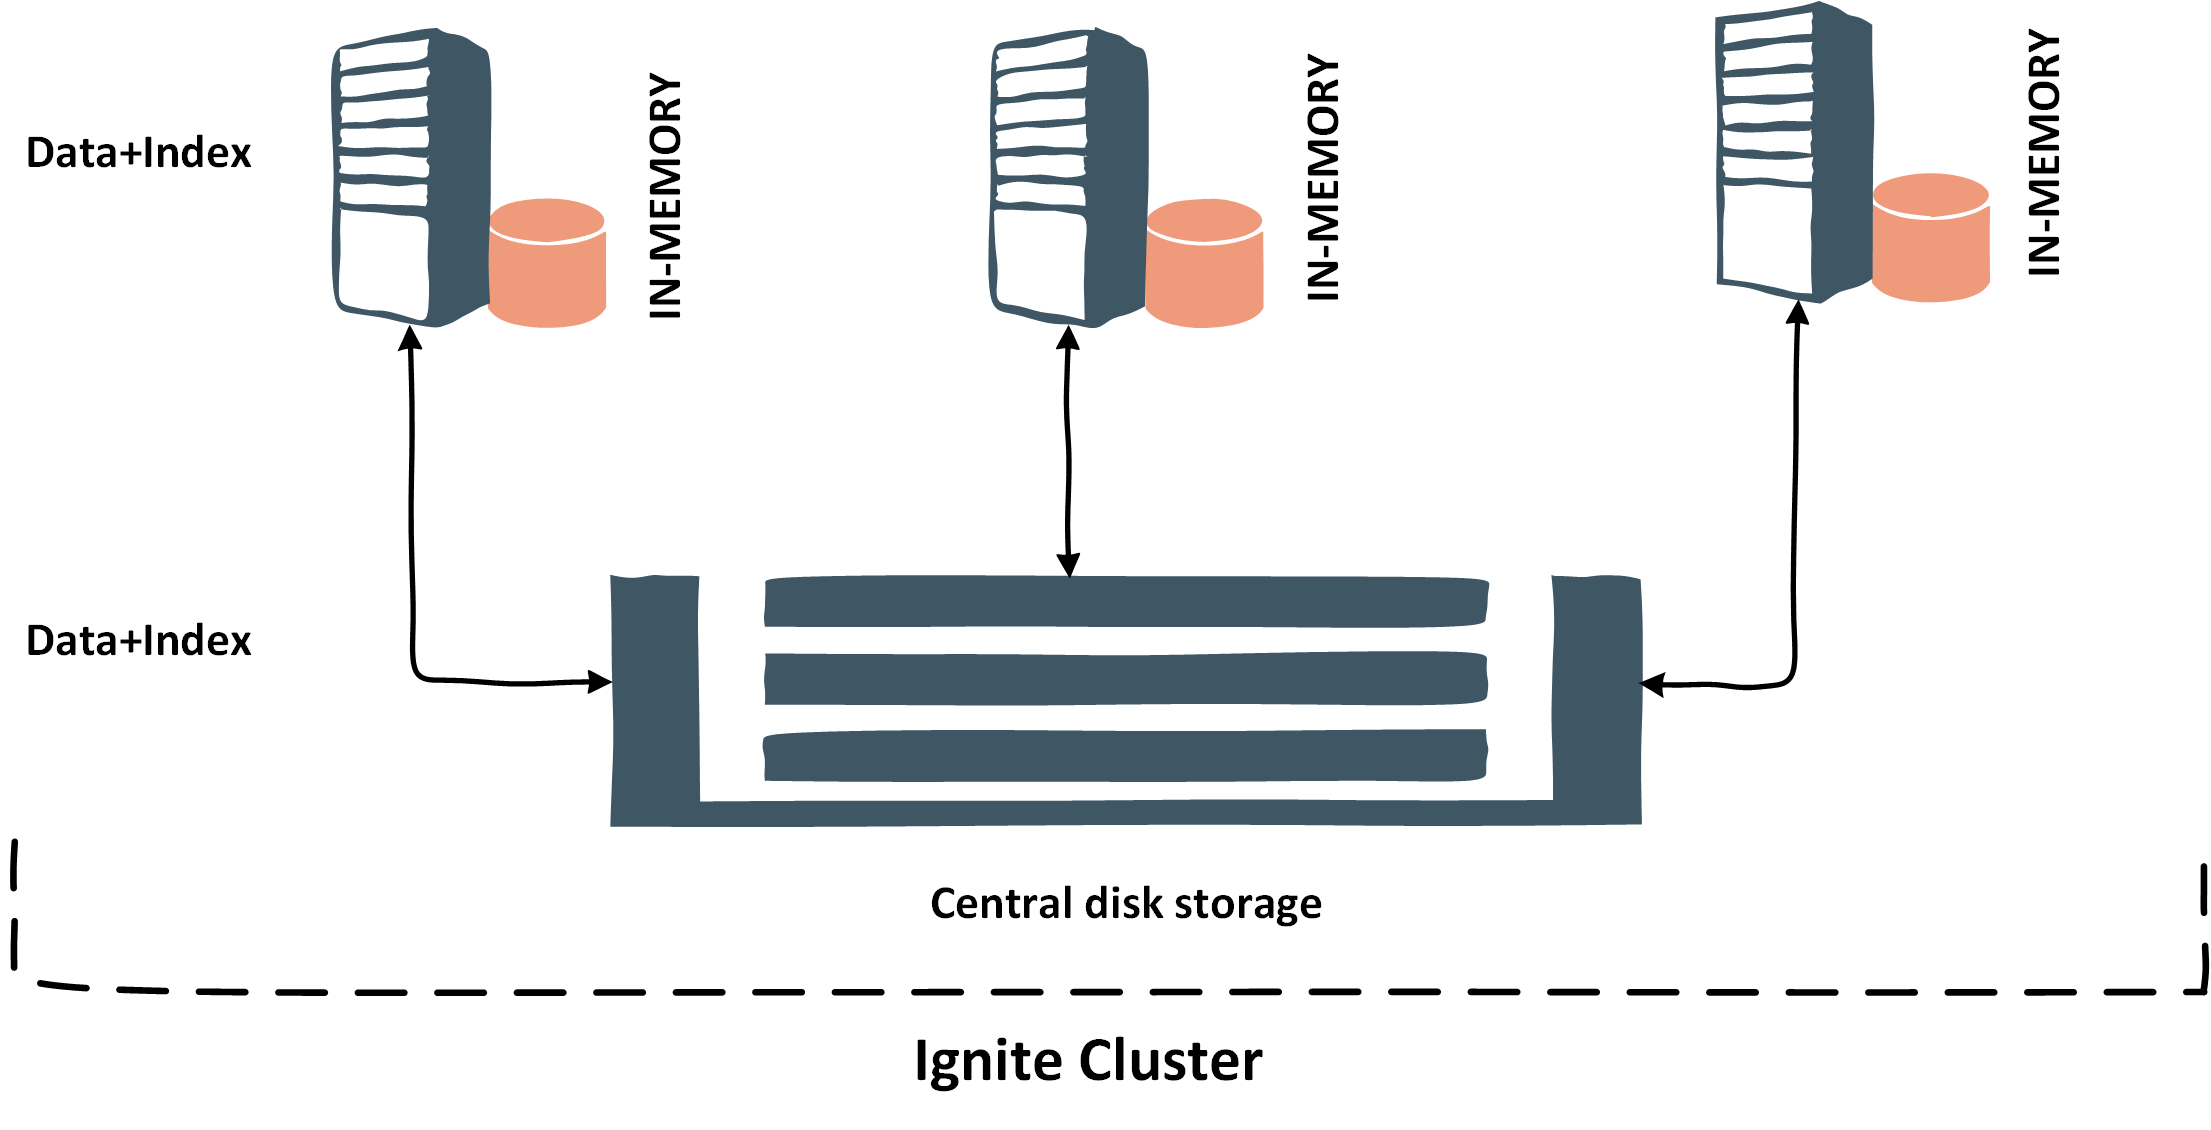 Central disk storage